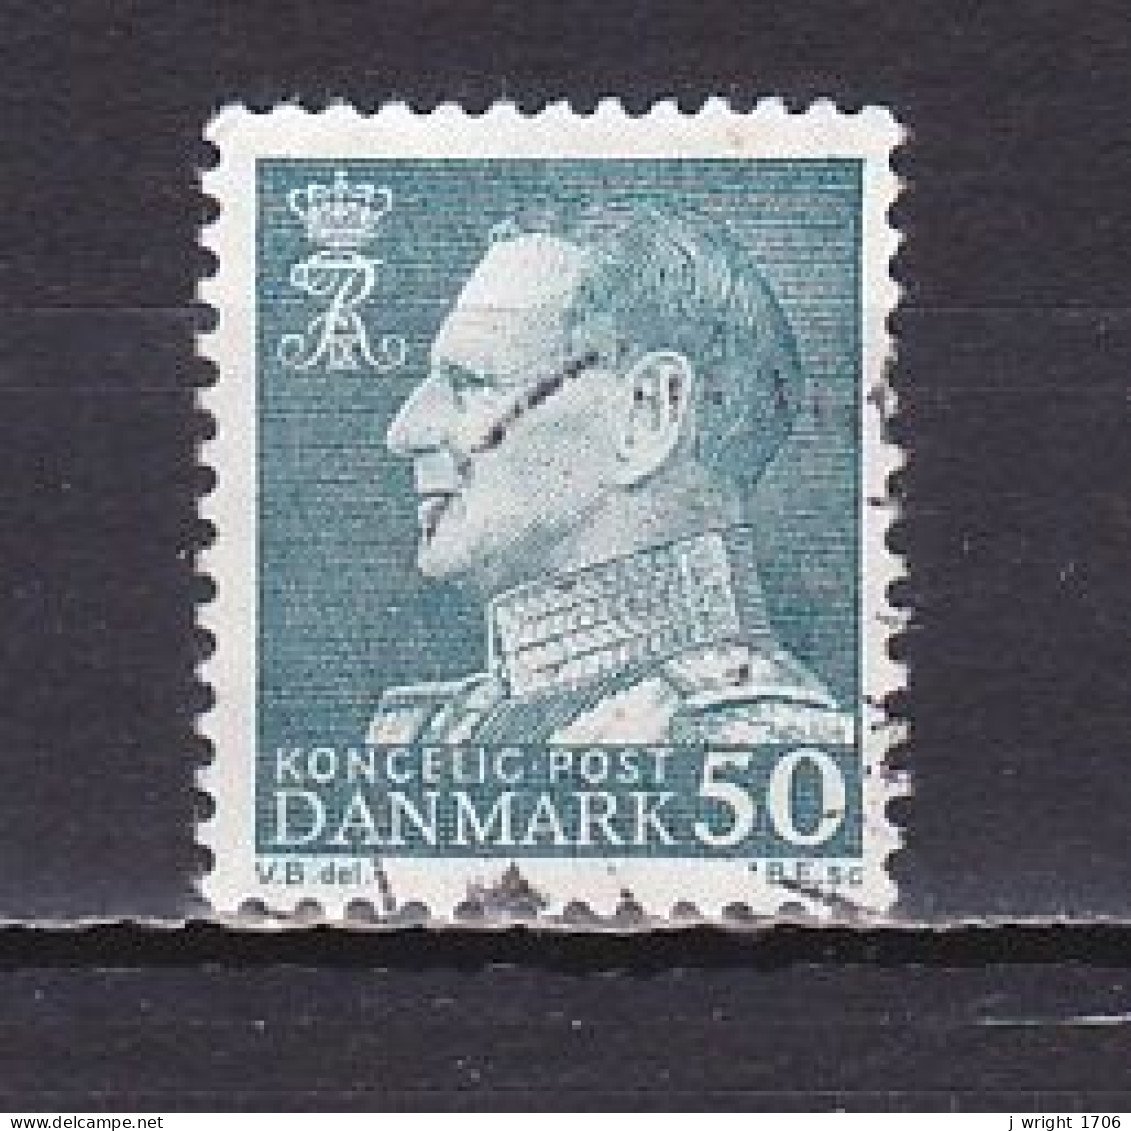 Denmark, 1961, King Frederik IX, 50ø, USED - Gebraucht